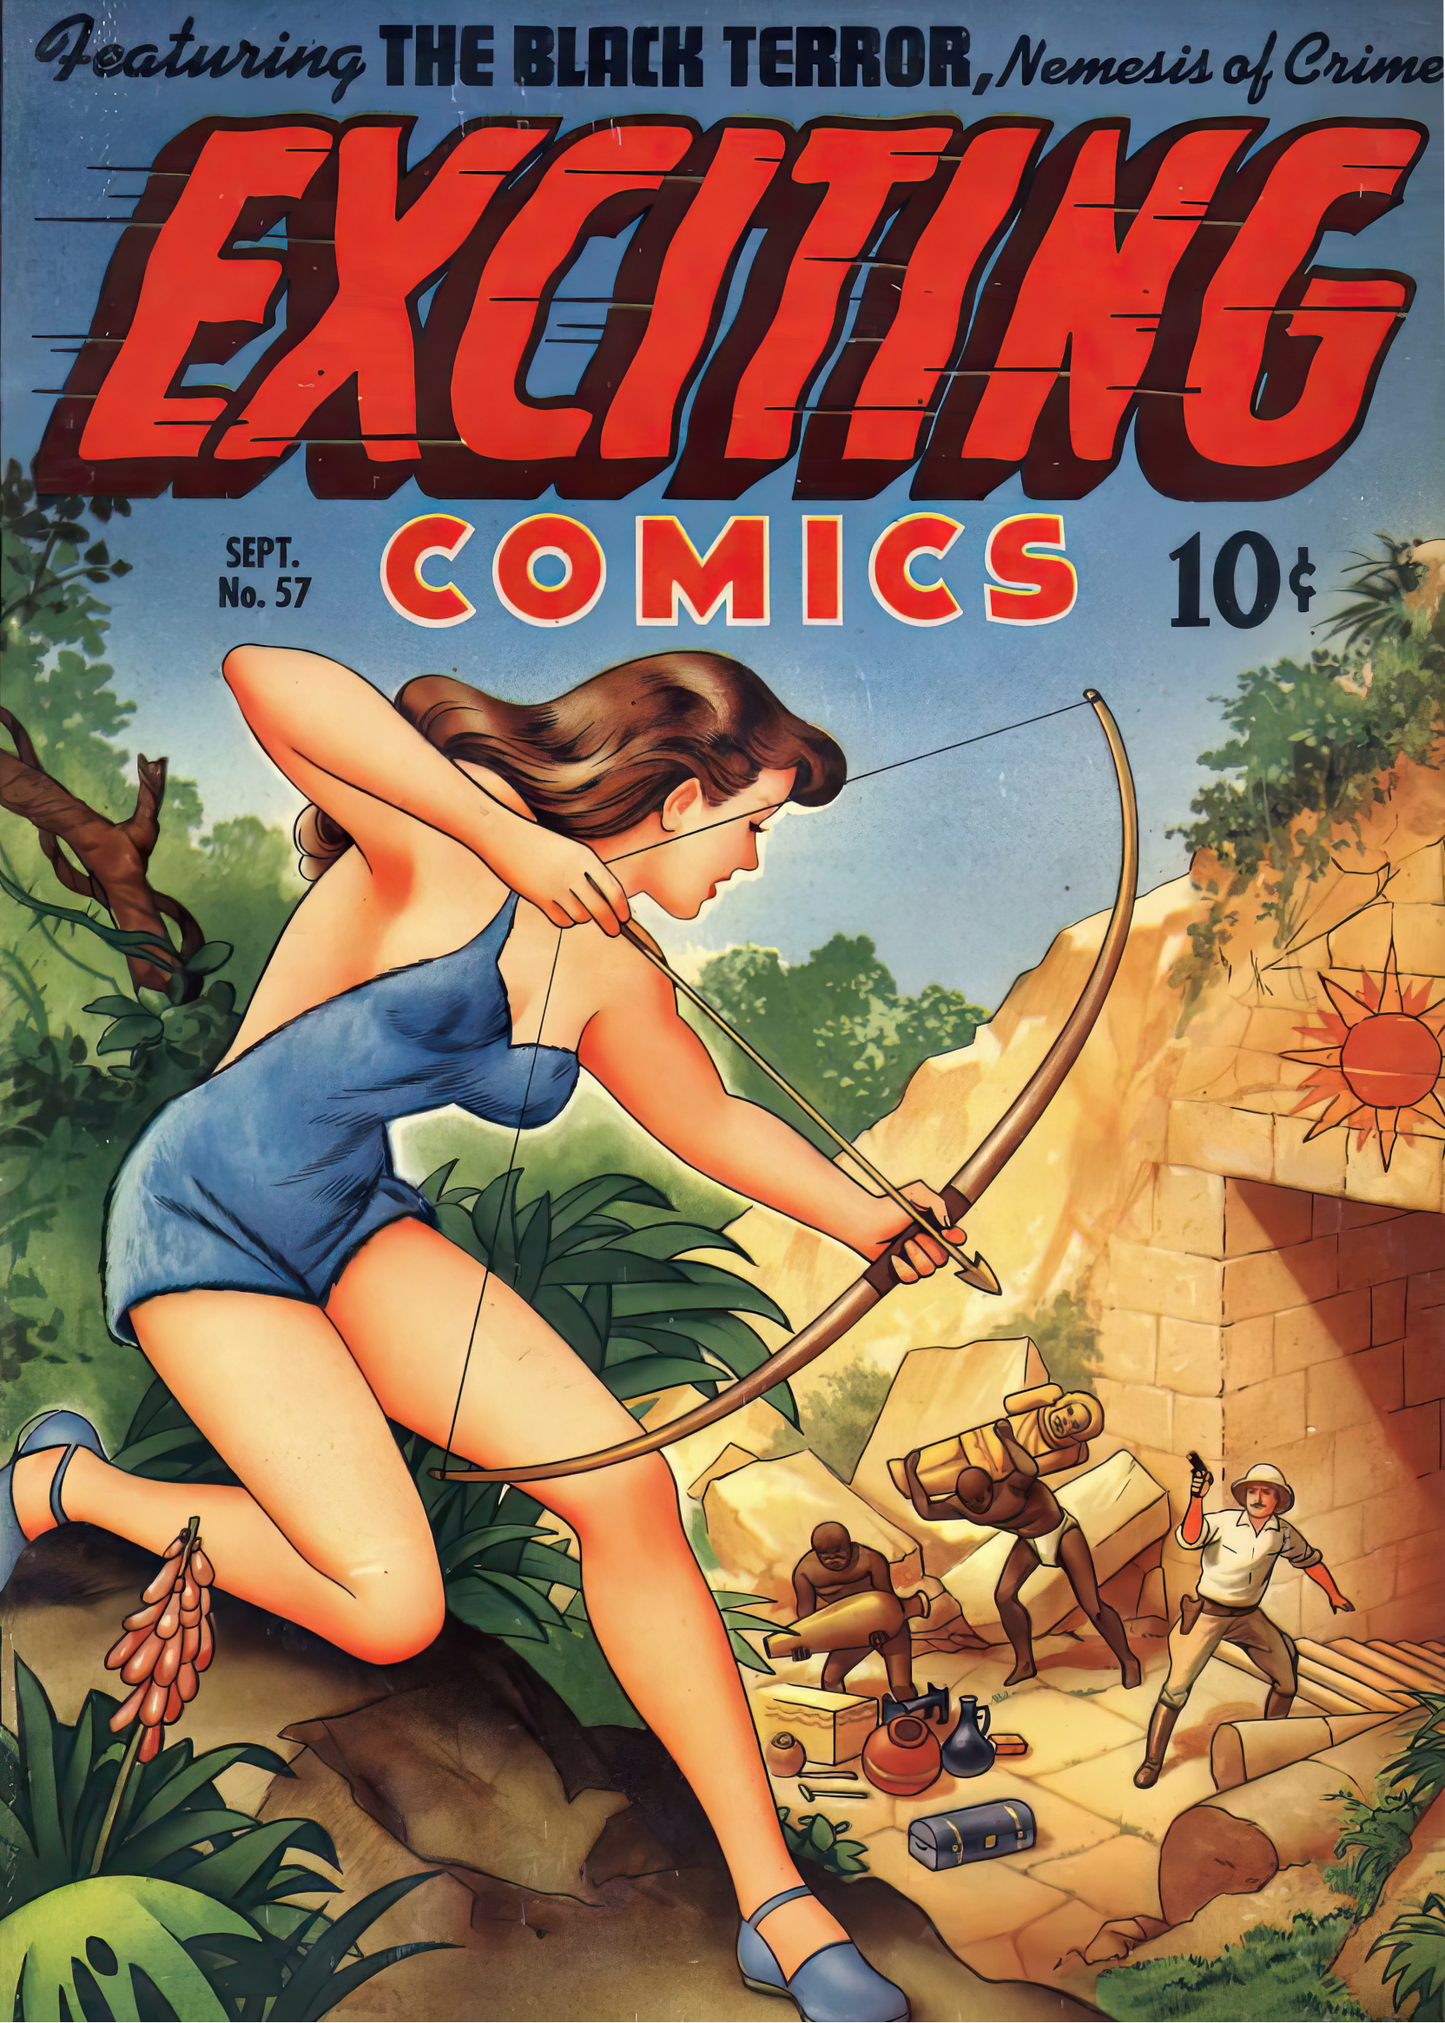 #1053 Exciting Comics #57